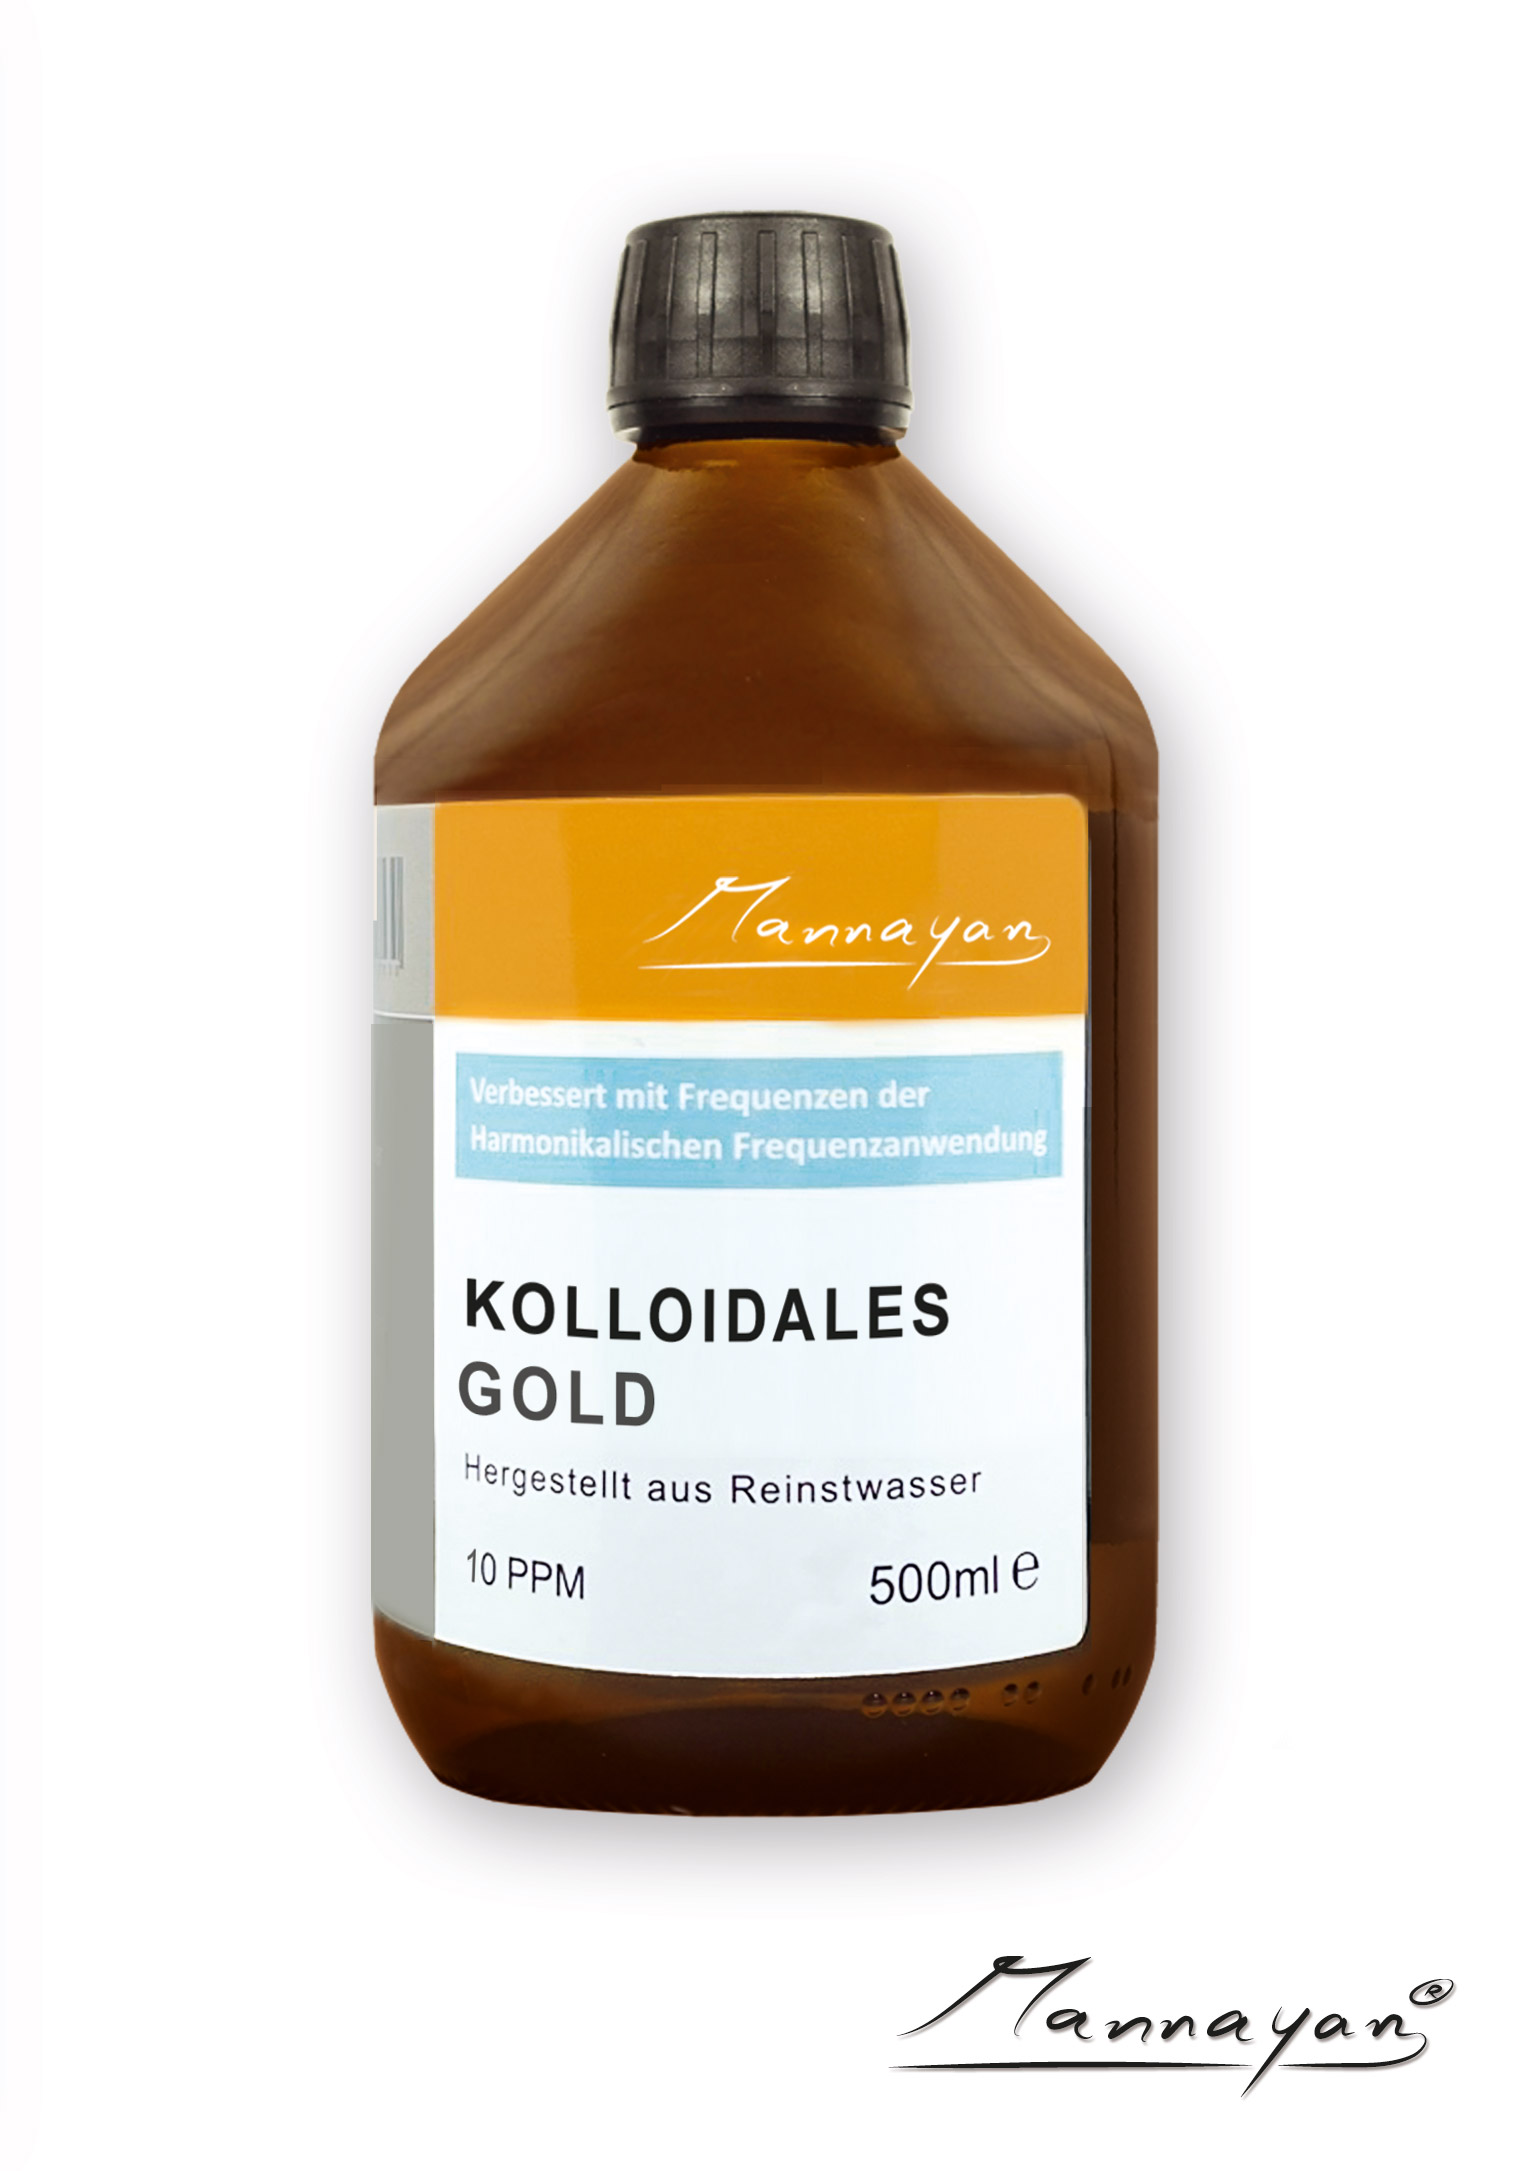 Mannayan Kolloidales Gold 500 ml